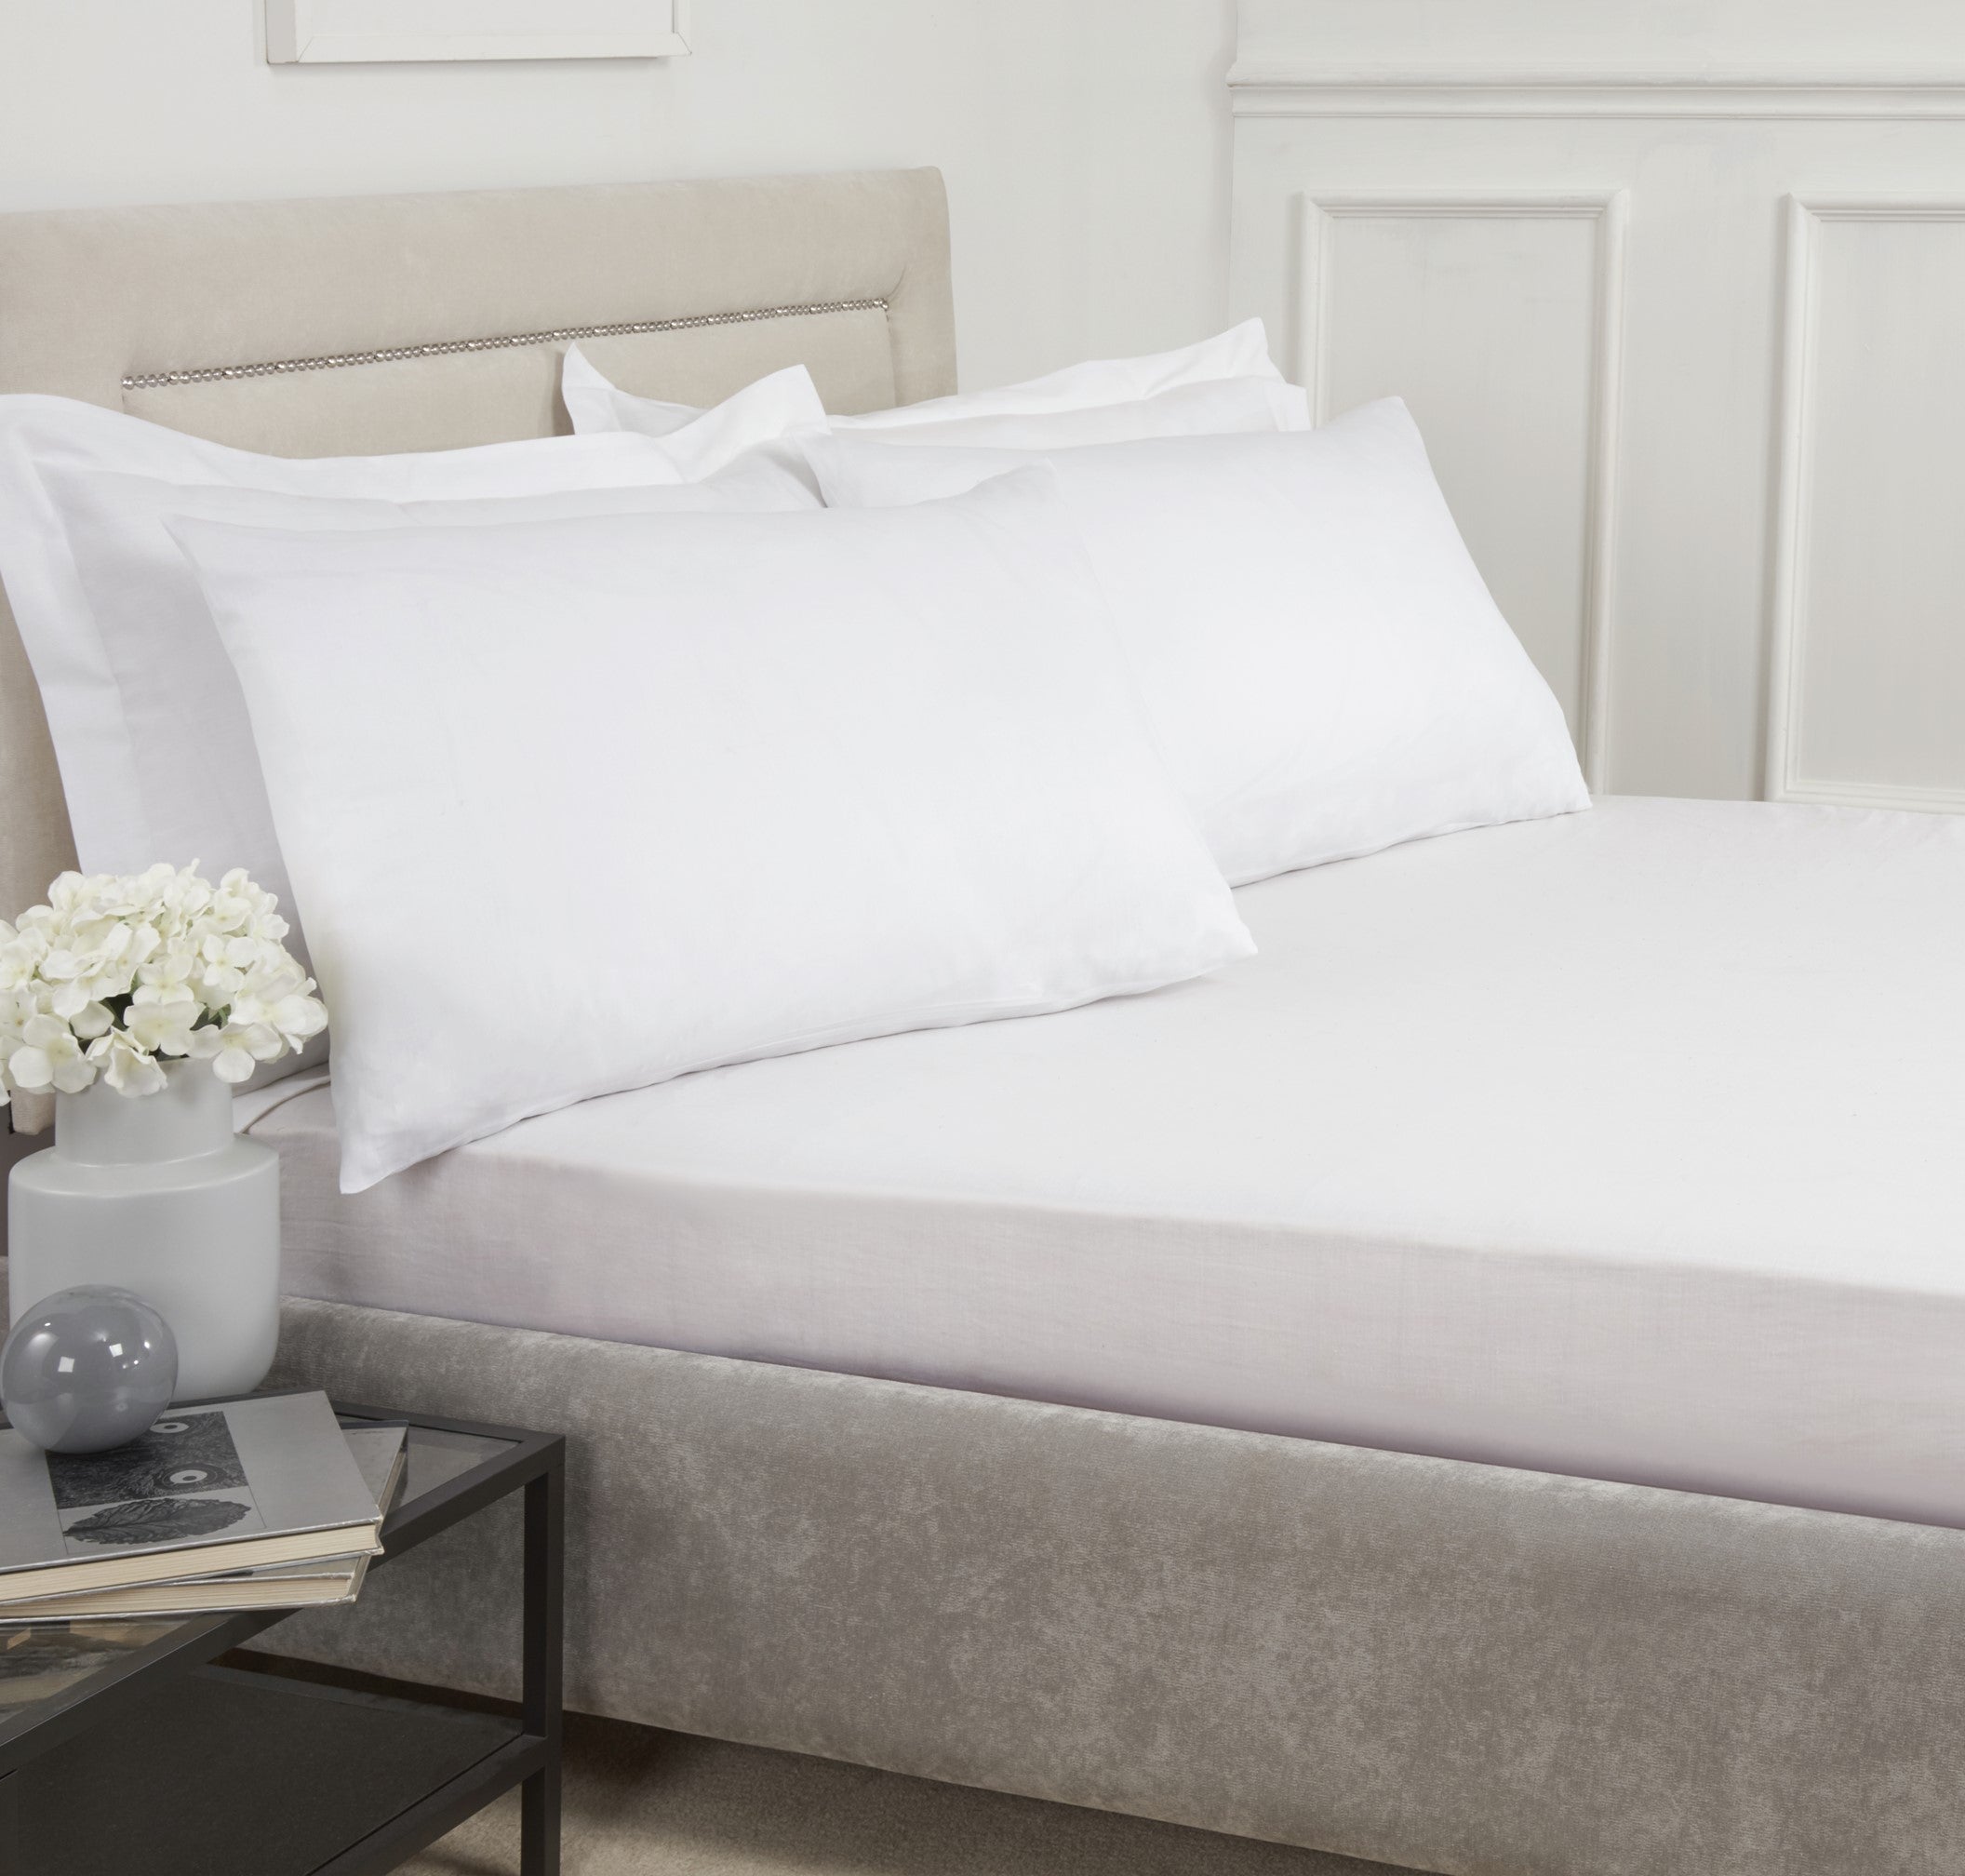 Image of 100% Cotton Sheet Range - White - Housewife Pillowcase Pair - TJ Hughes